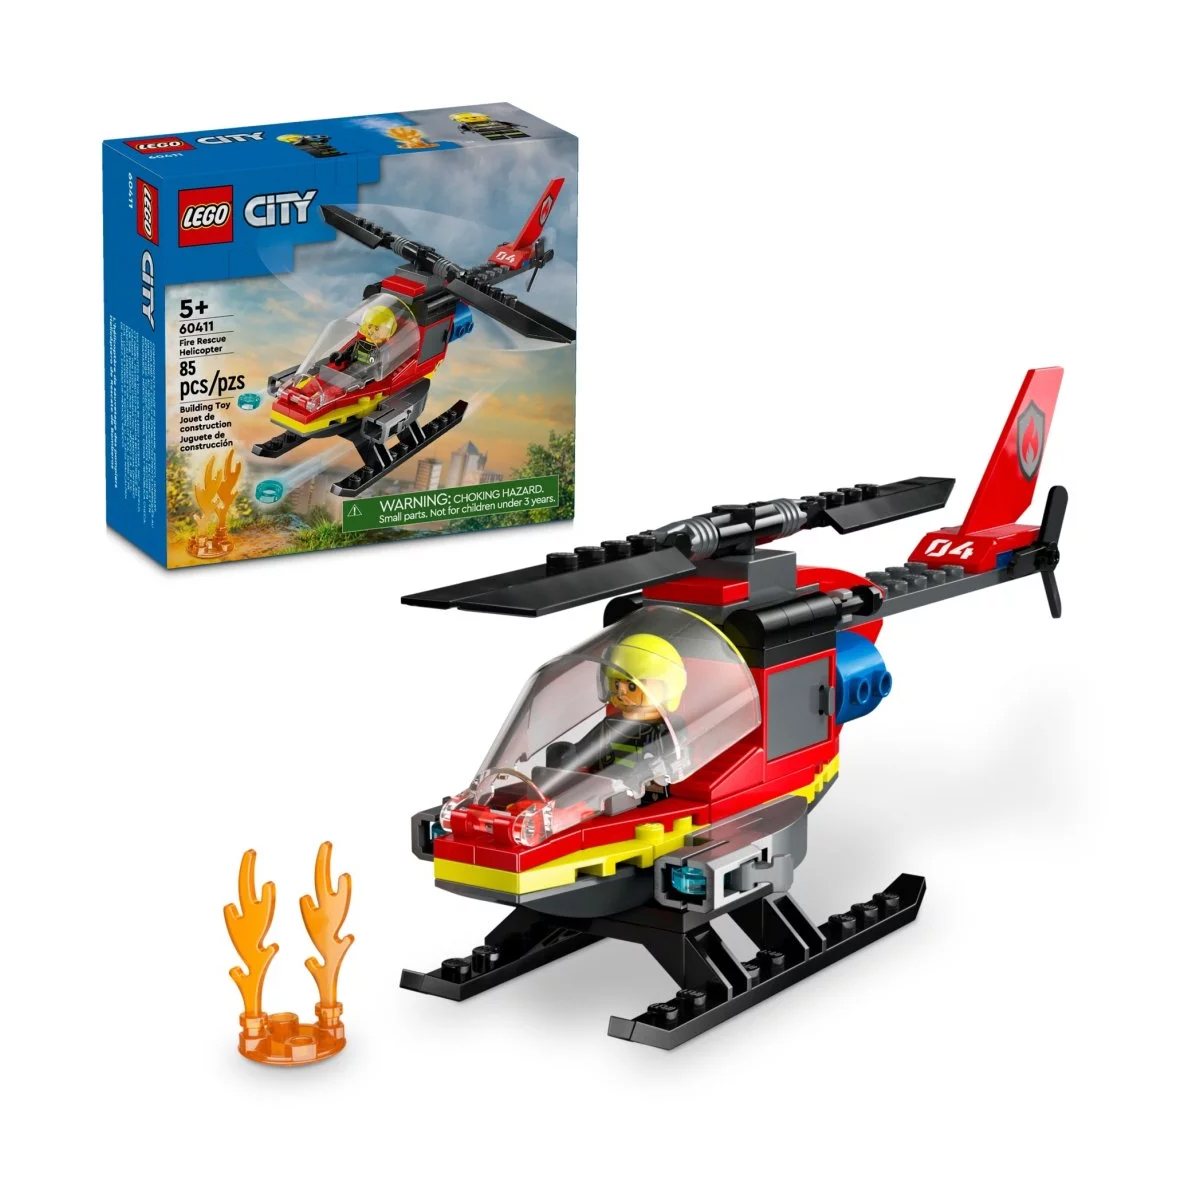 Конструктор Lego City Fire Rescue Helicopter 60411, 85 деталей цена и фото